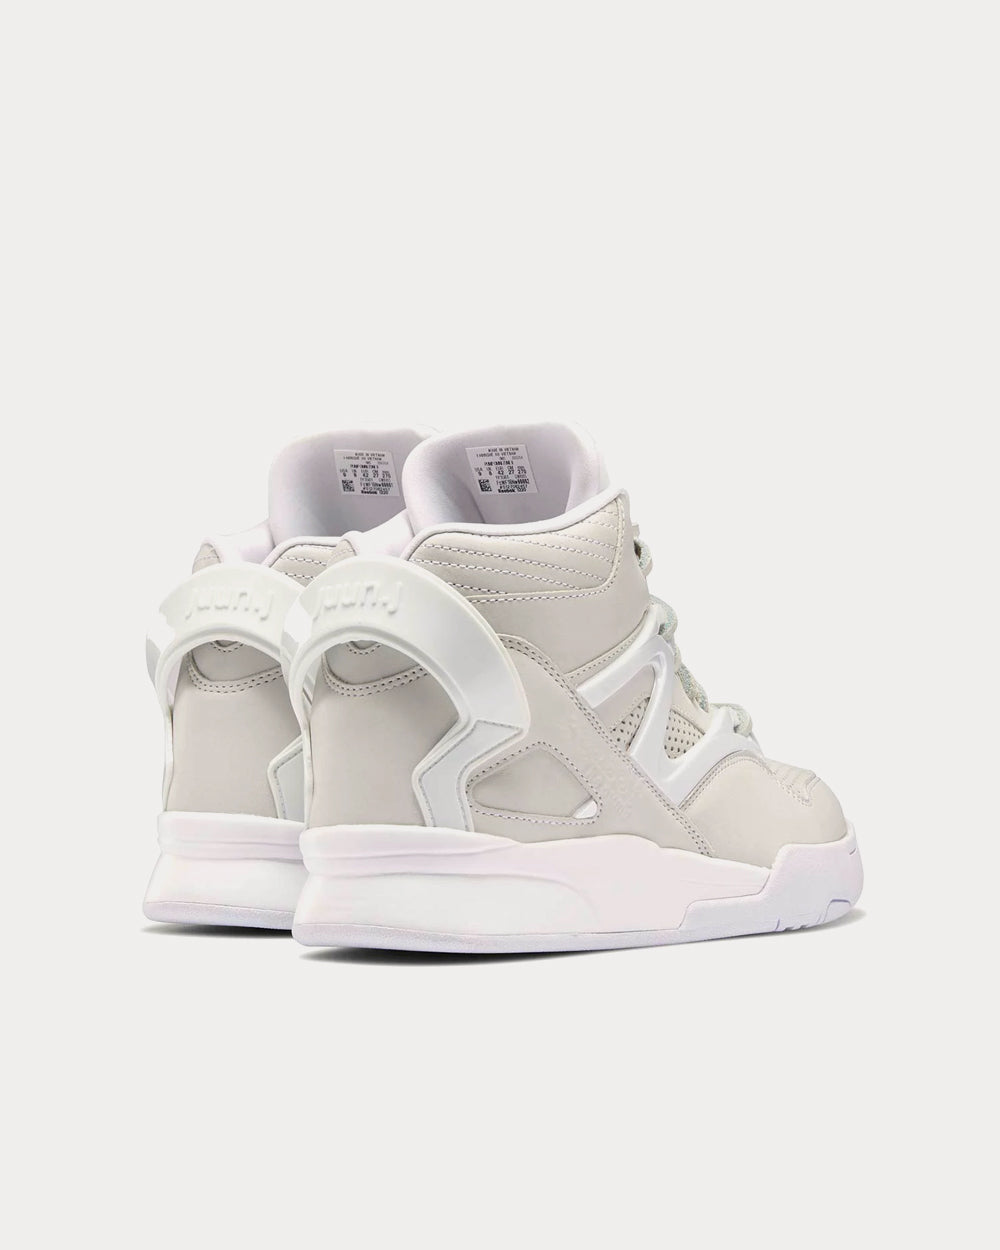 Reebok x Juun.J - Omni Zone II White High Top Sneakers